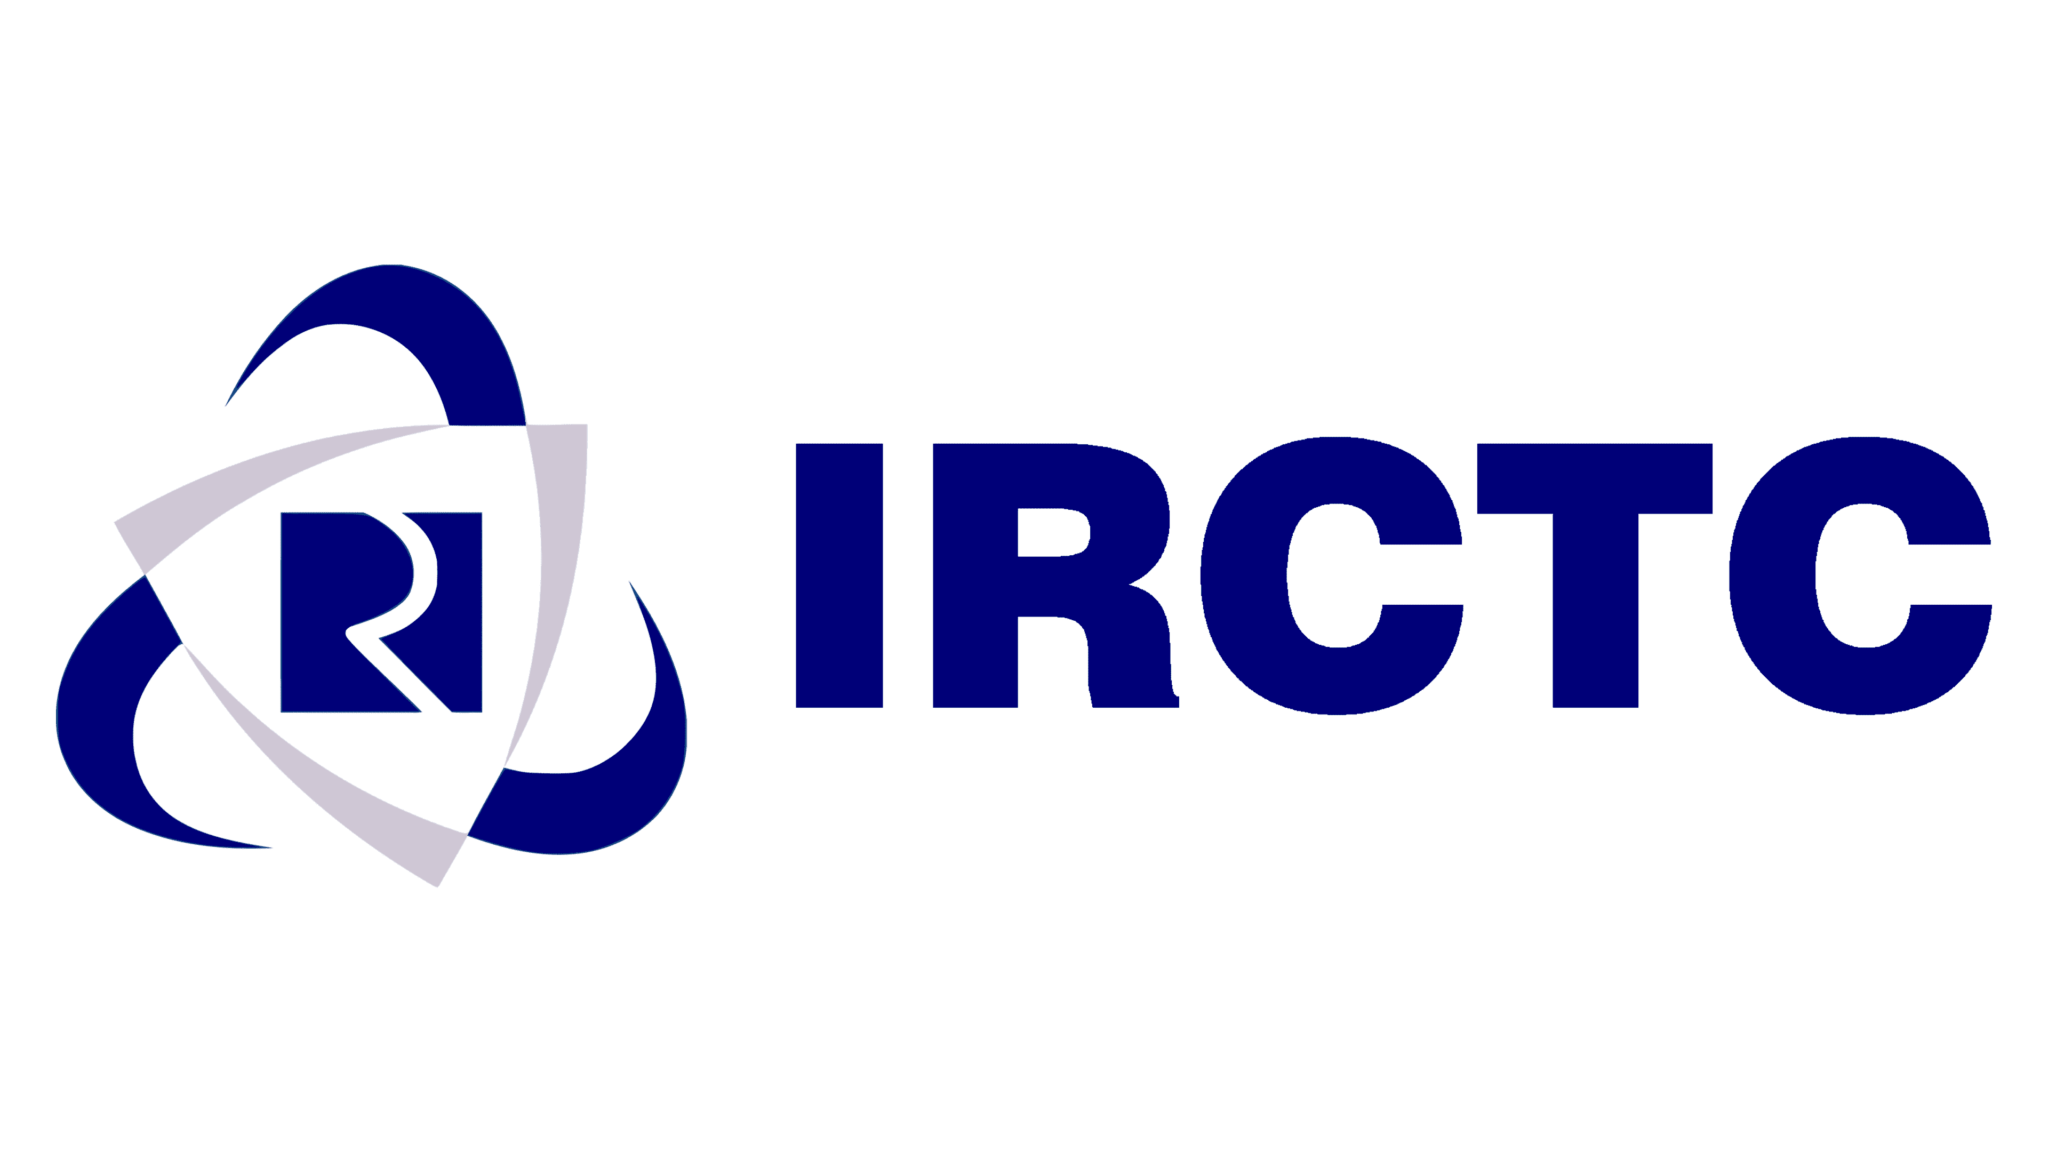 IRCTC Recruitment 2024